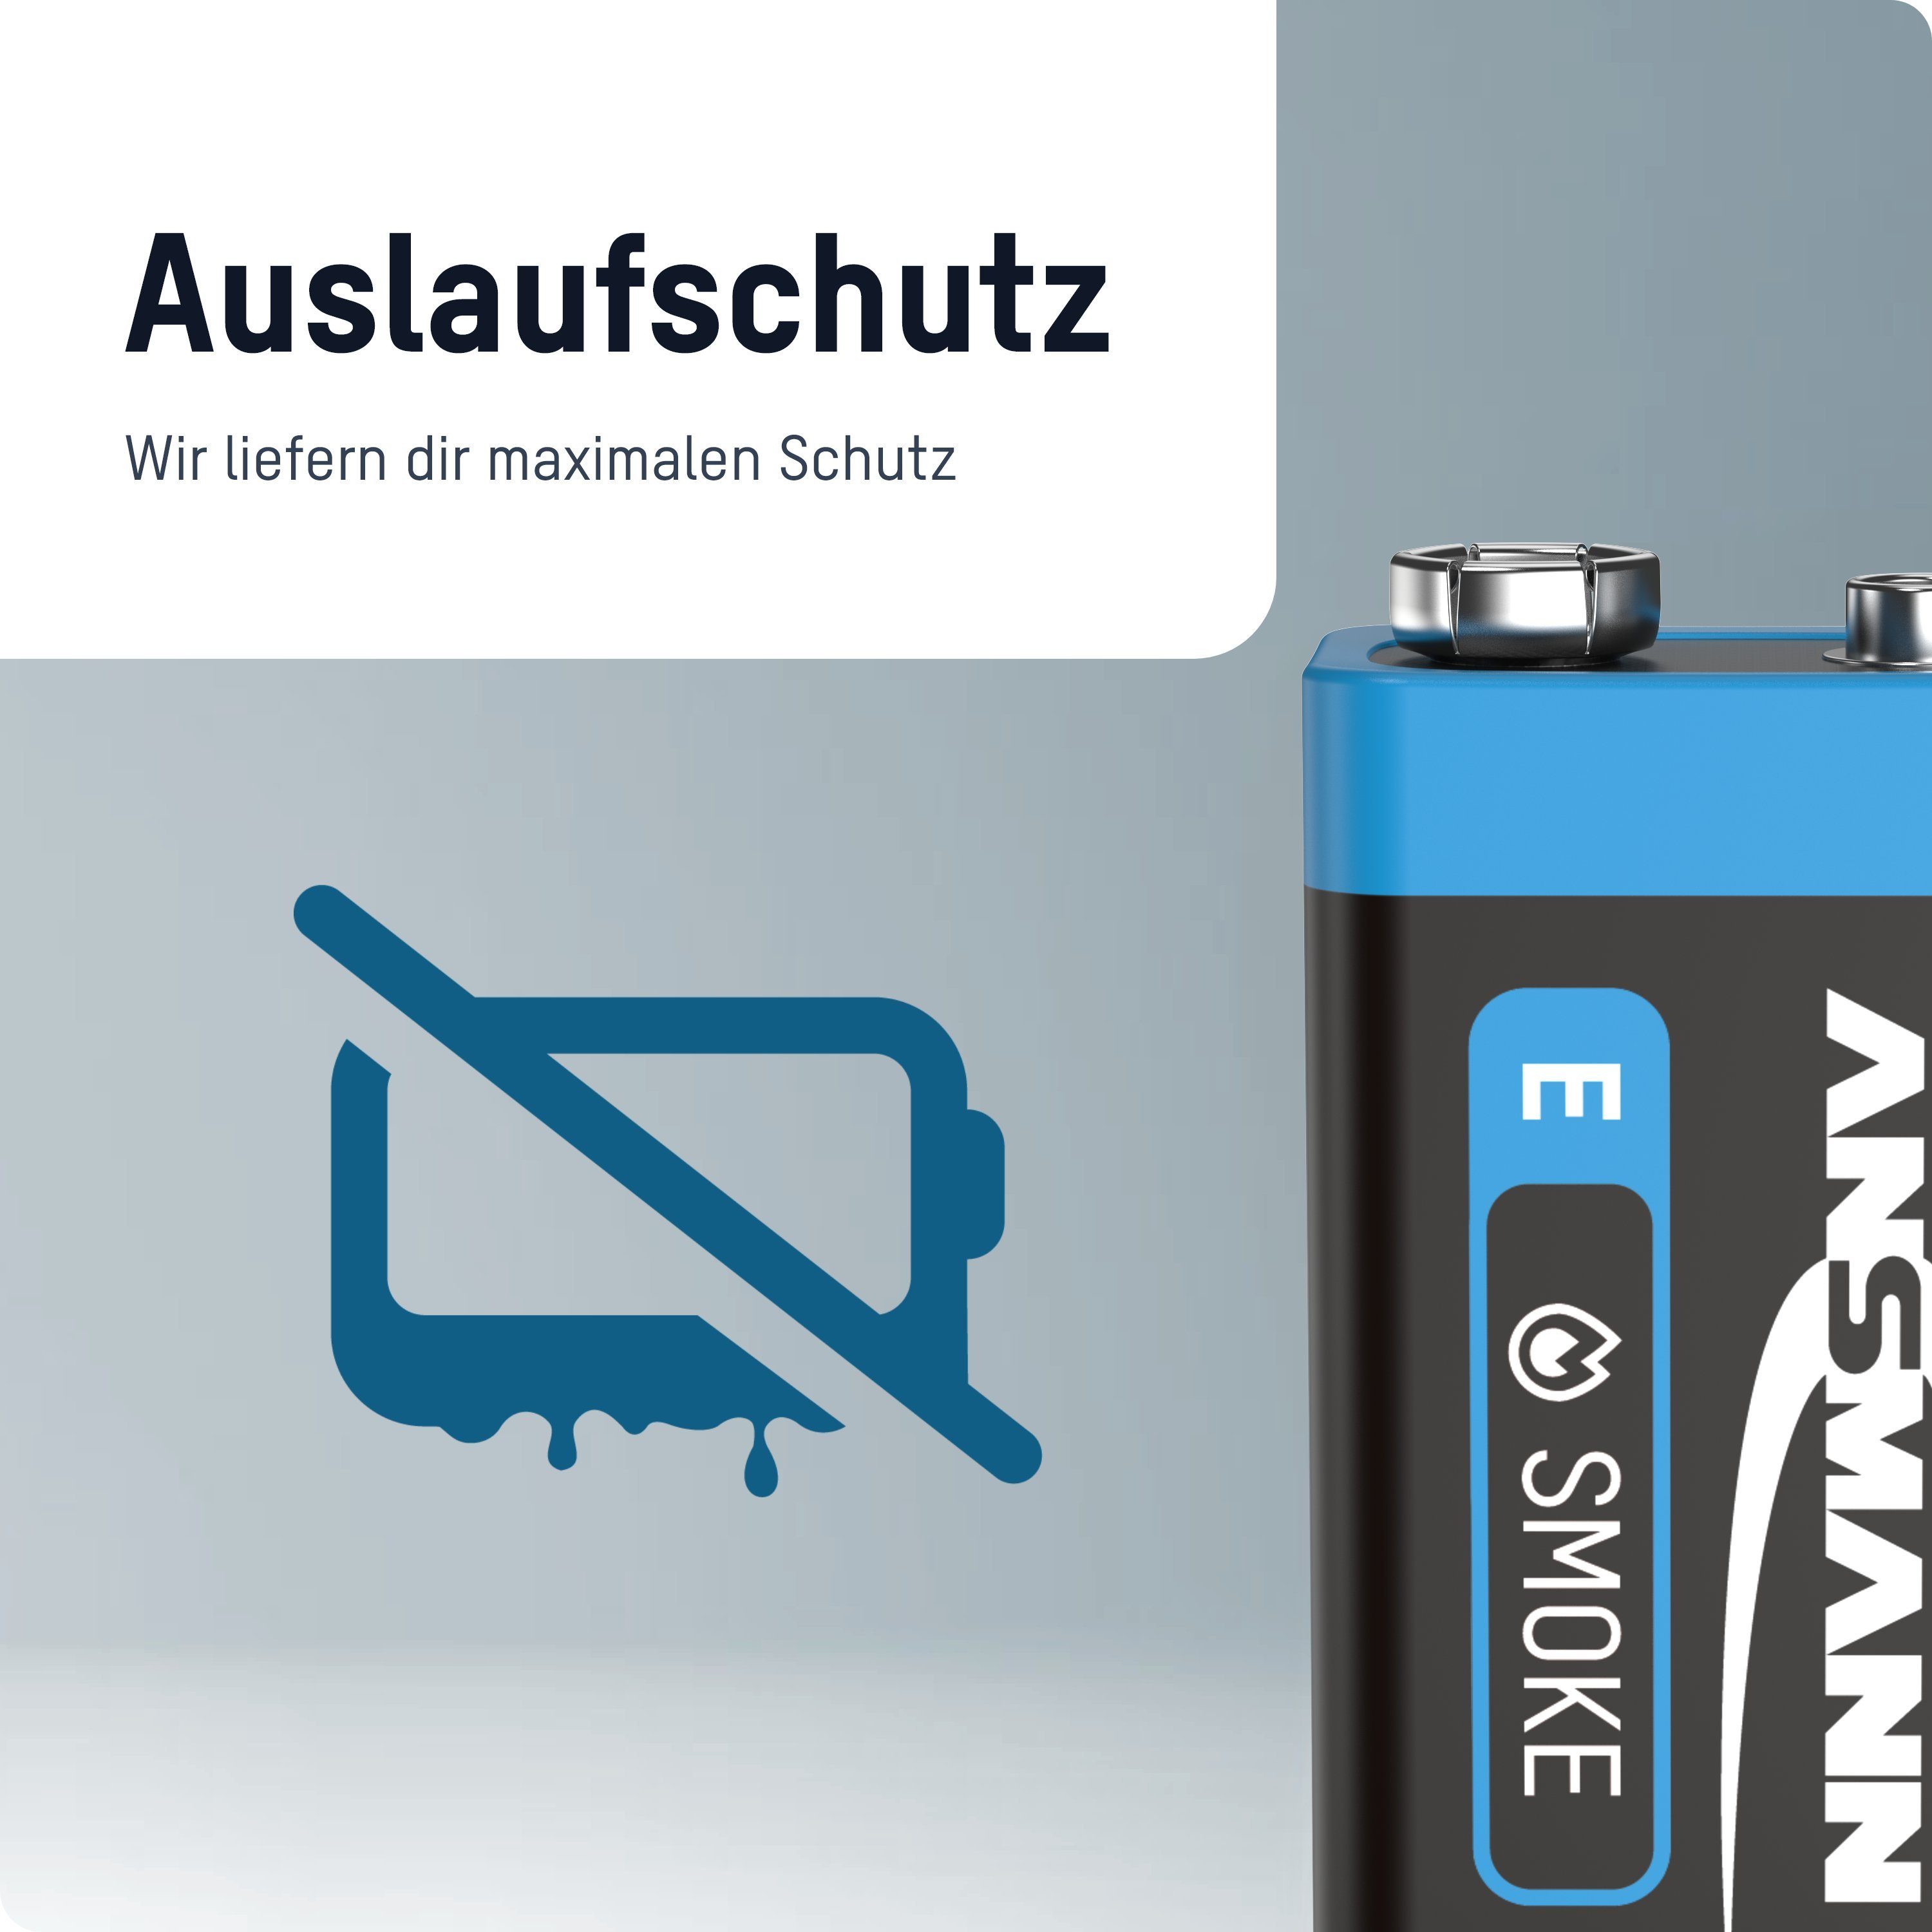 Rauchmelder Qualität 5 ANSMANN® Batterien - Premium Batterie Lithium Block longlife 9V